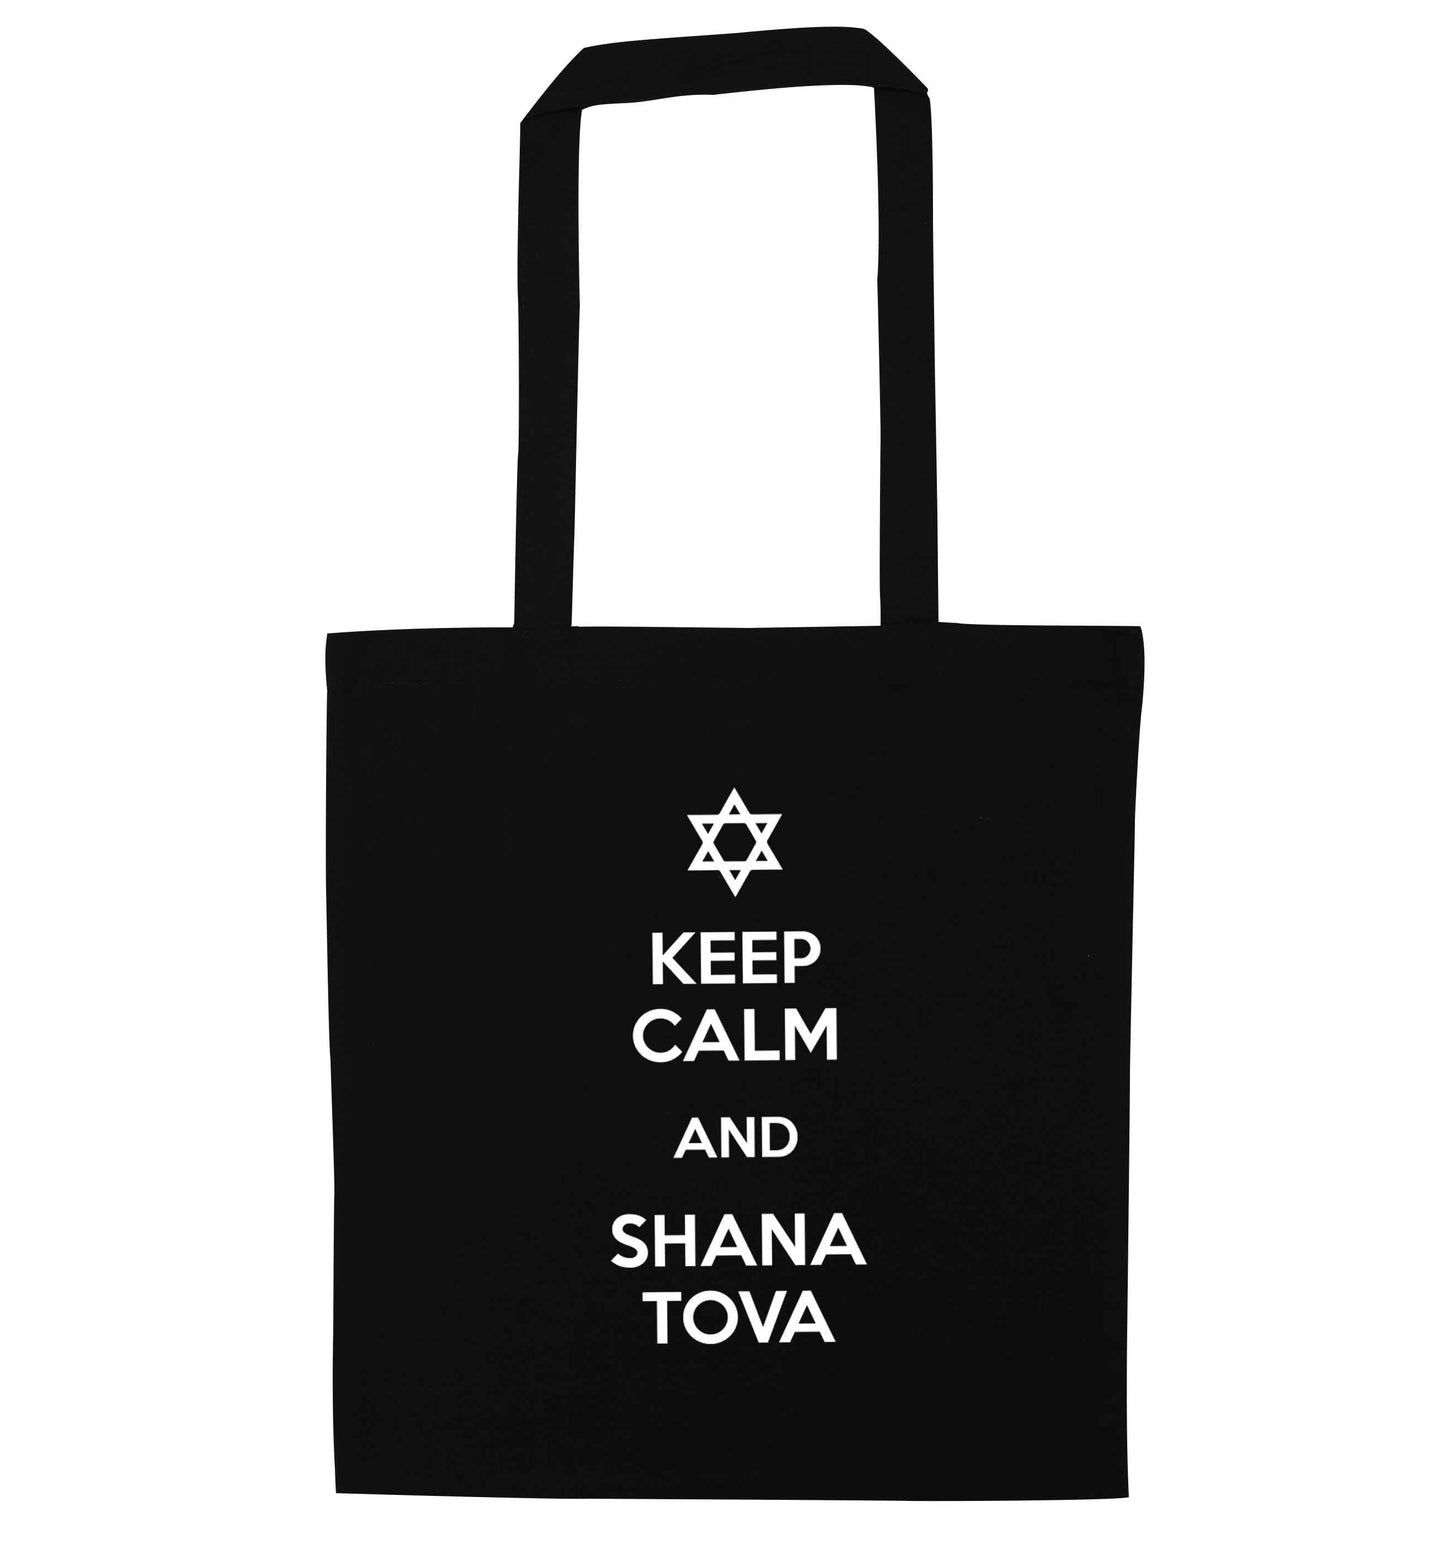 Keep calm and shana tova black tote bag